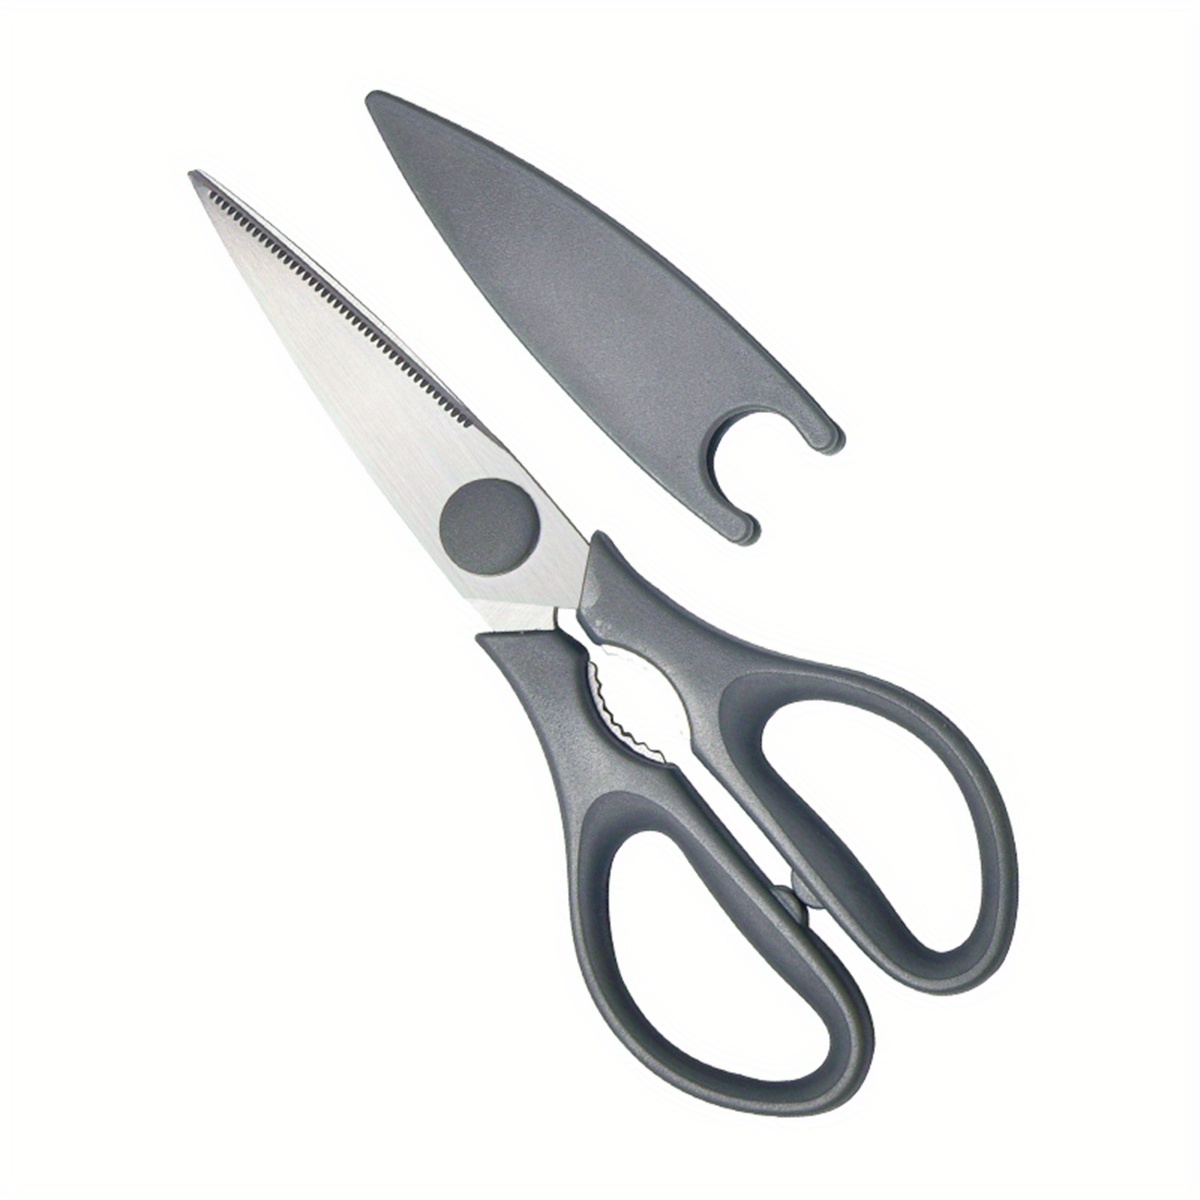 TECHEF Kitchen Shears, All Purpose Scissors, Dishwasher Safe, Heavy Duty  Meat Scissors Poultry Shears, Stainless Steel, Made in Korea (Dark Gray)